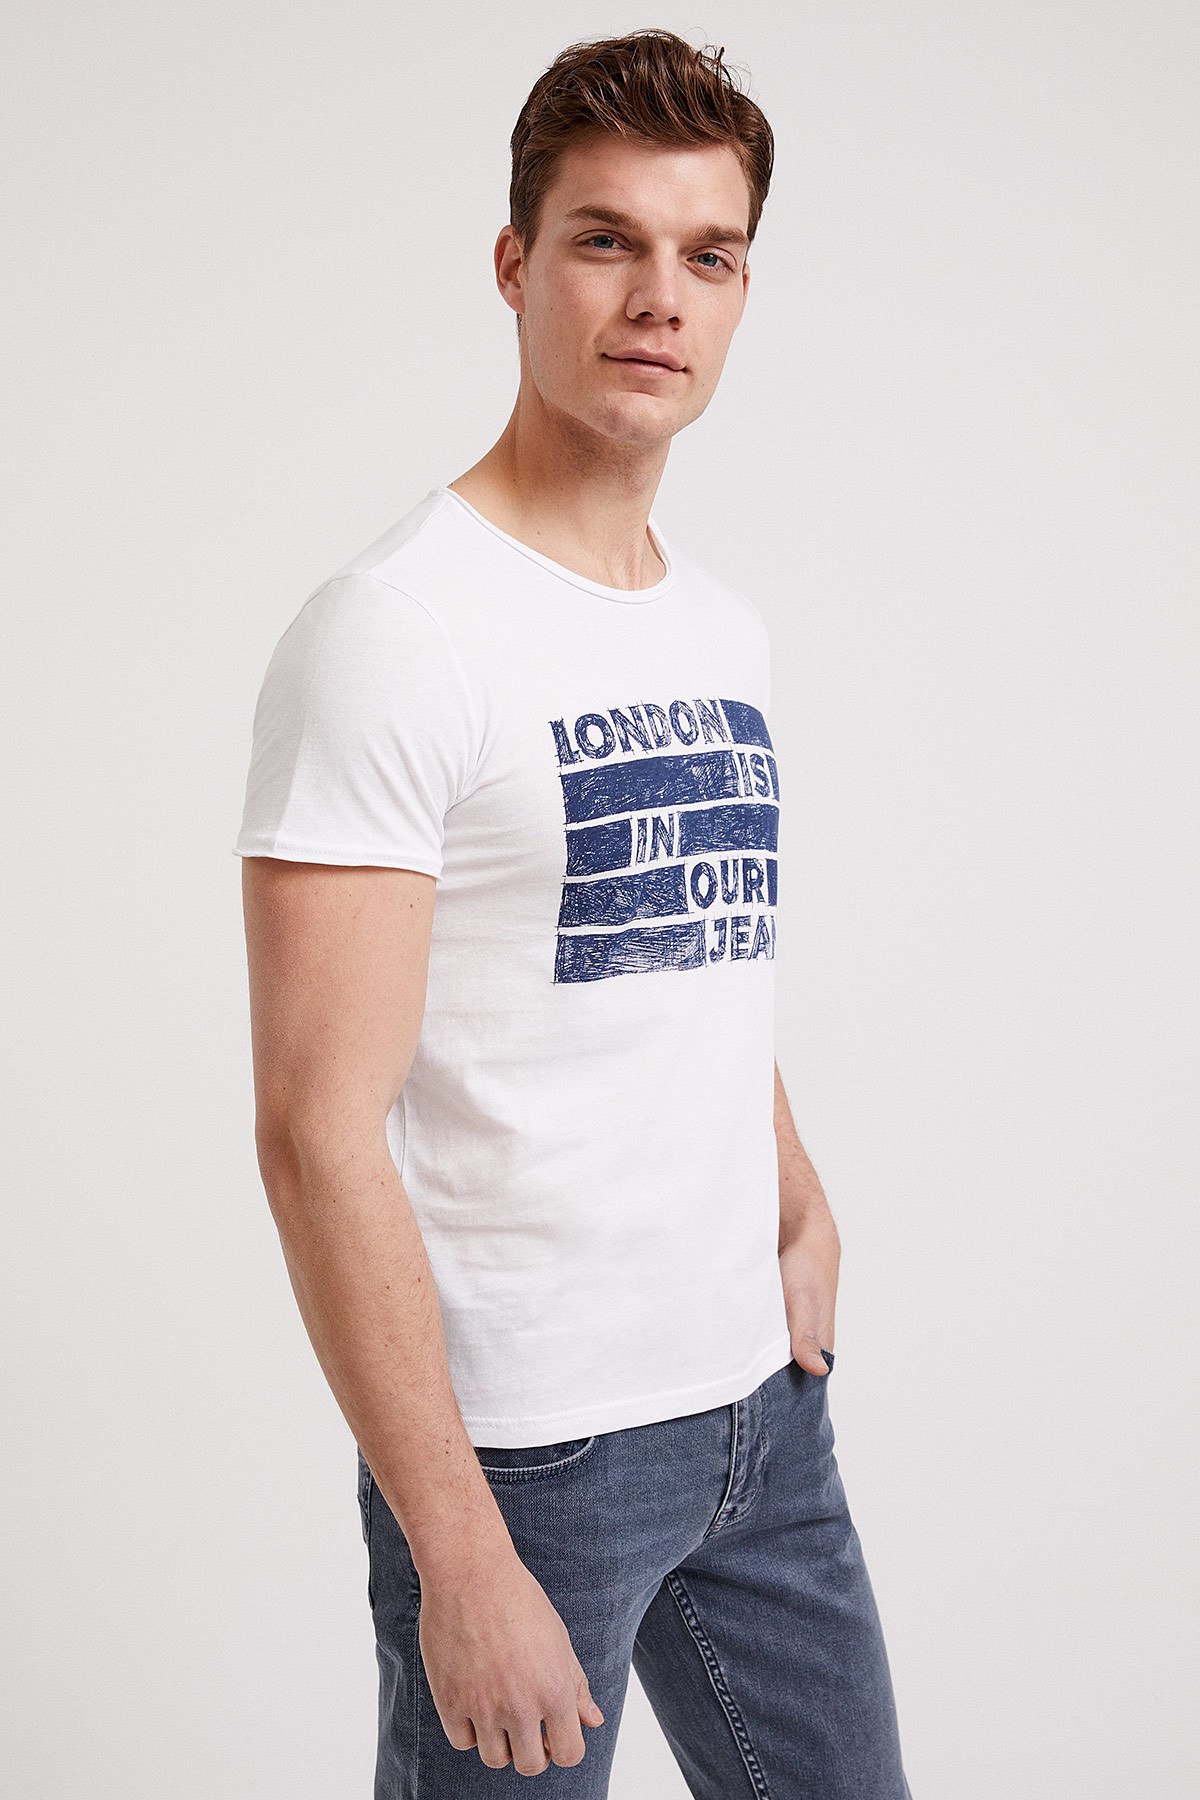 Lee Cooper Erkek T-Shirt 202 LCM 242019 Beyaz